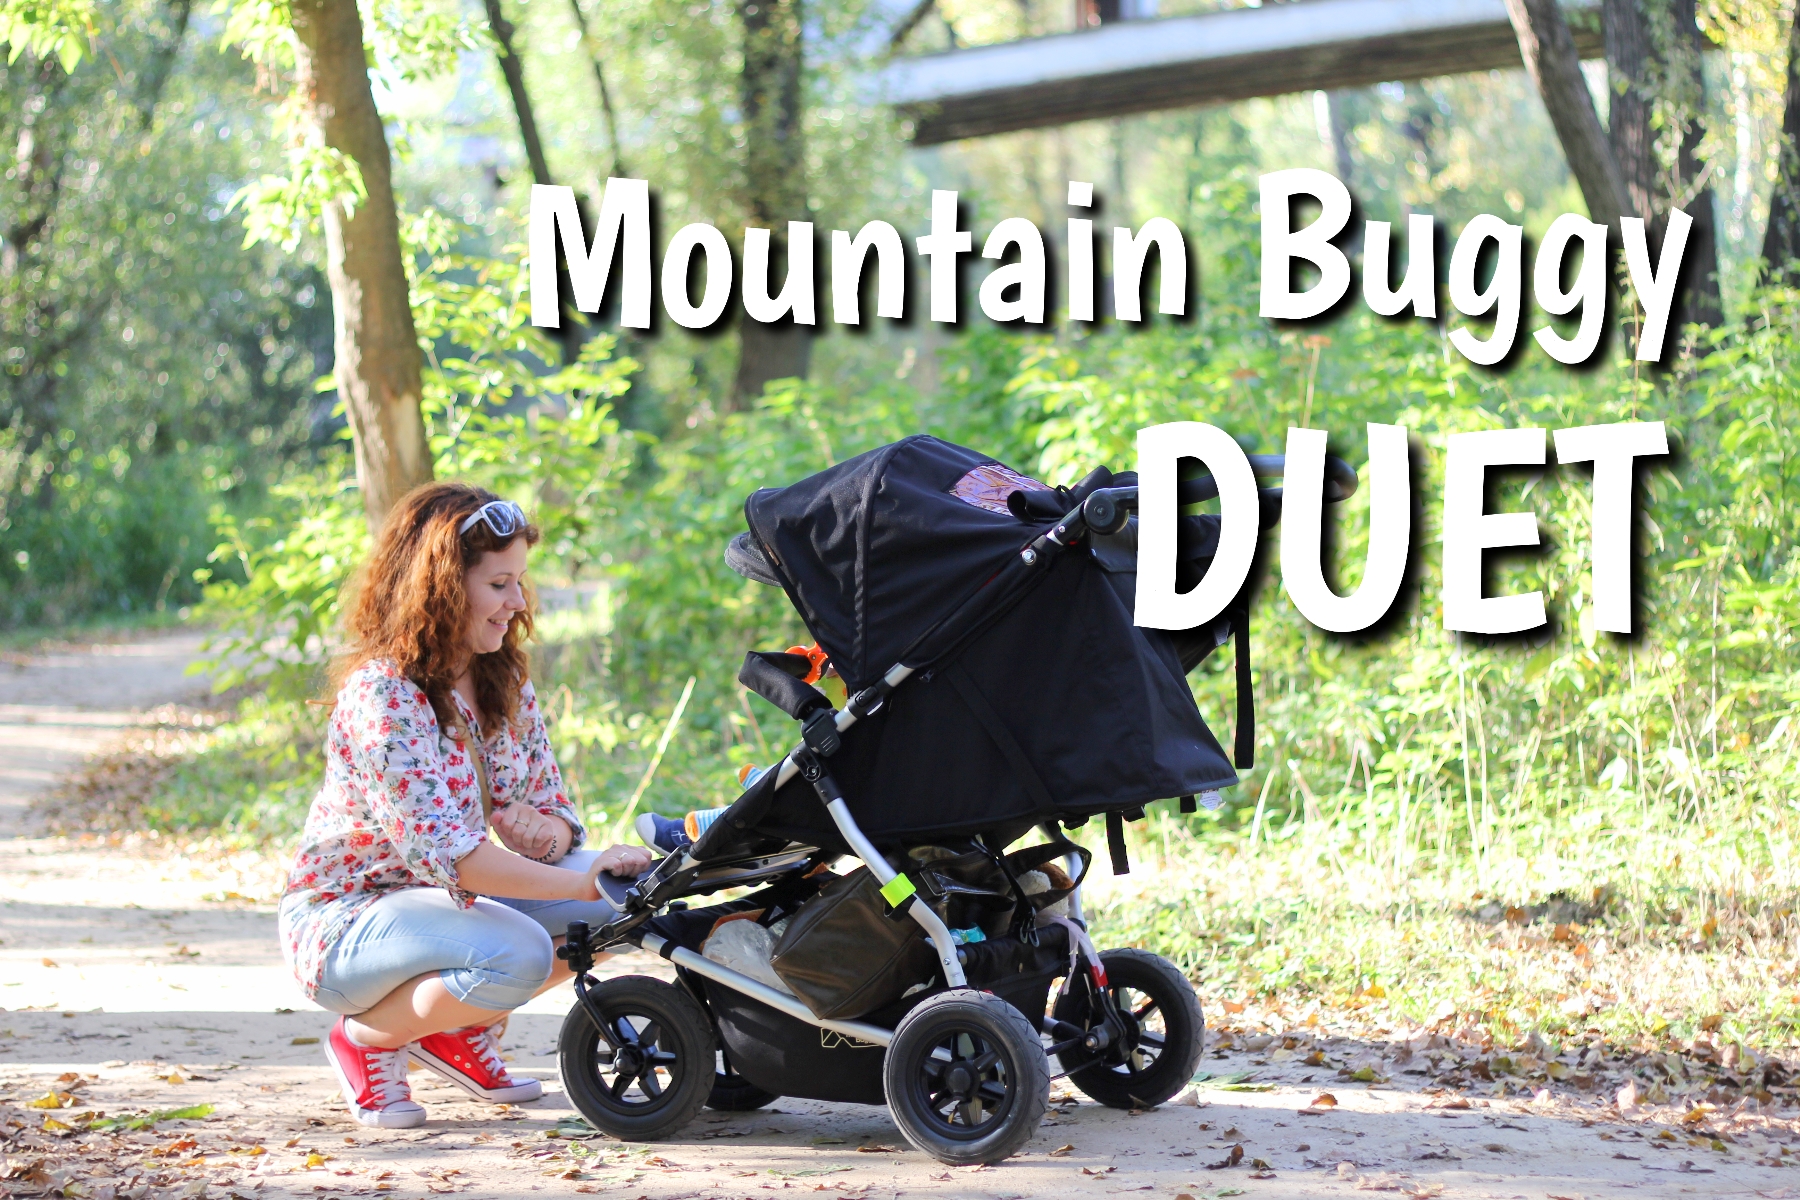 Mountain Buggy Duet